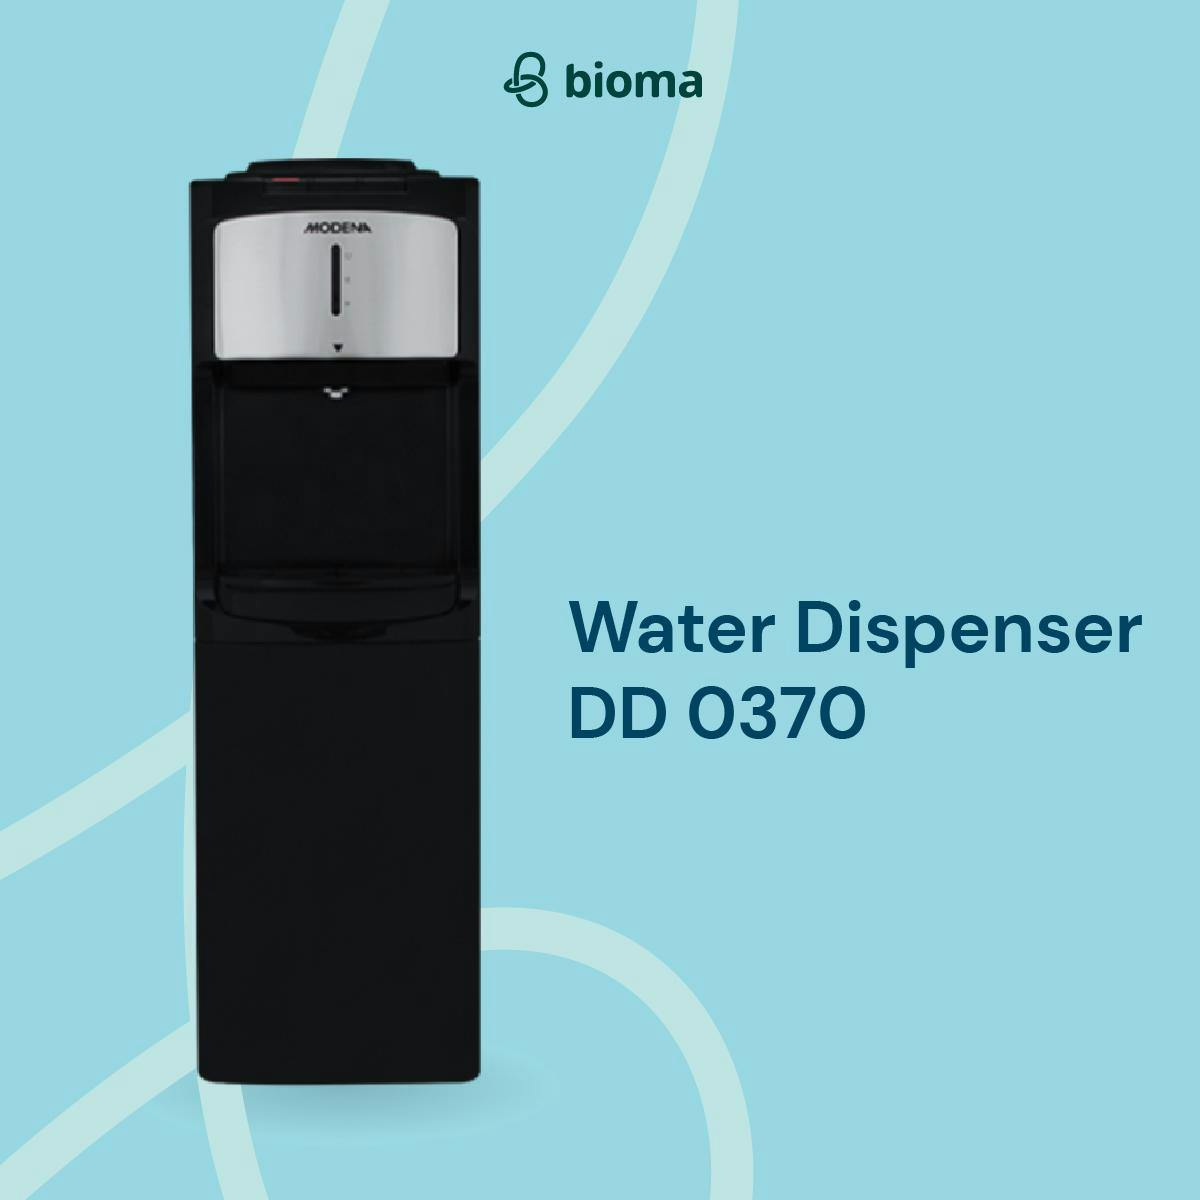 Water Dispenser DD 0370